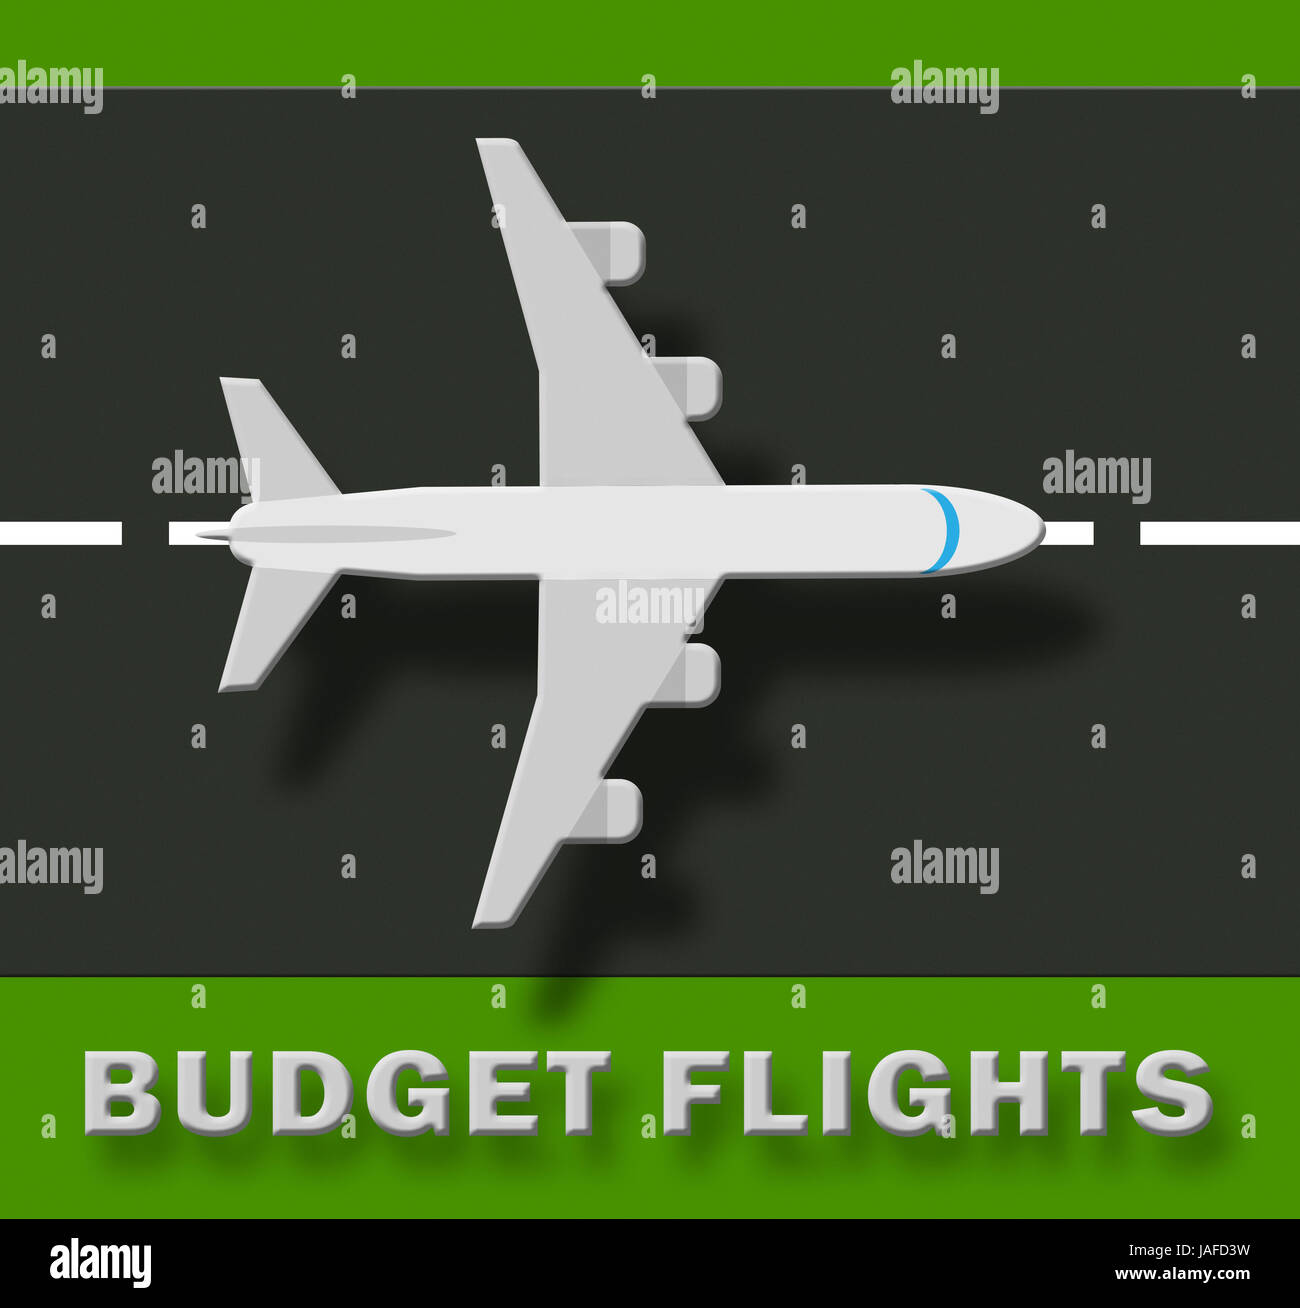 Budget Flights Plane Shows Special Offer 3d Illustration Stock Photo